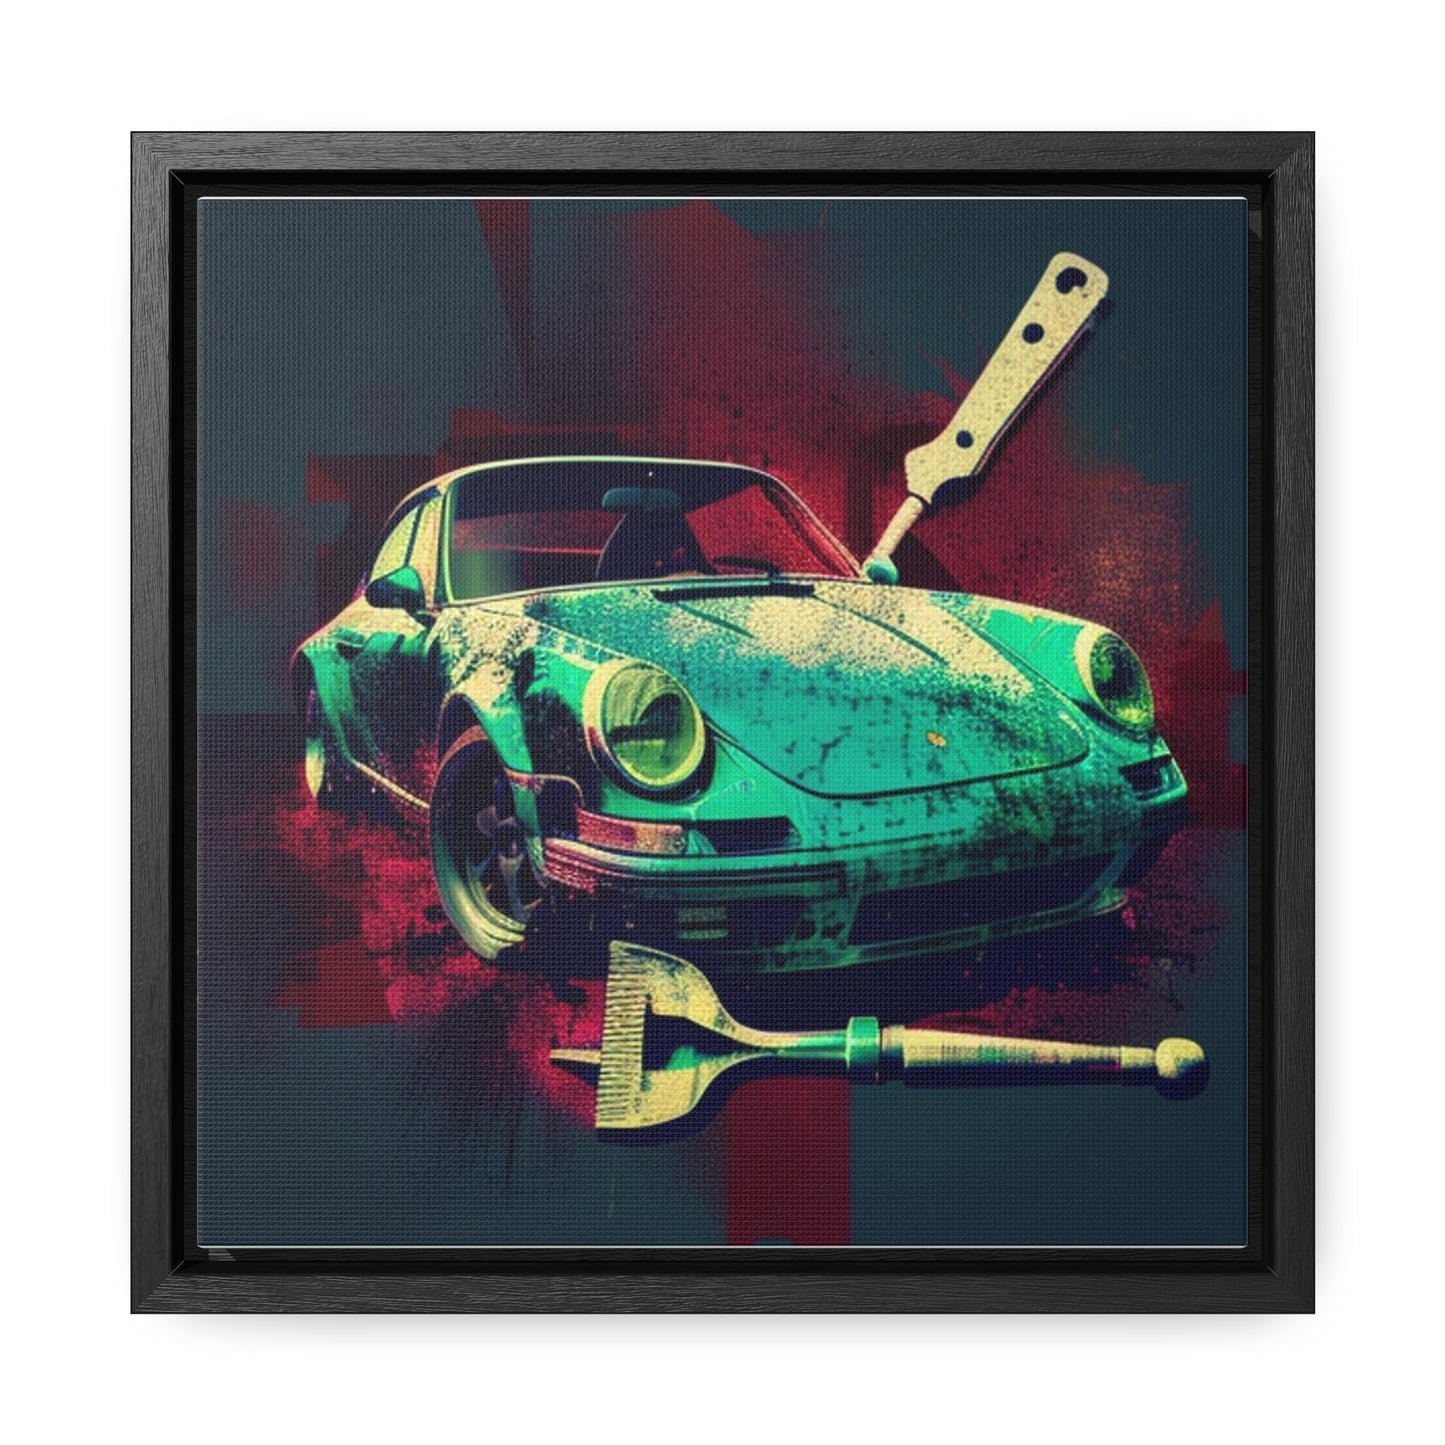 Gallery Canvas Wraps, Square Frame Porsche Abstract 4